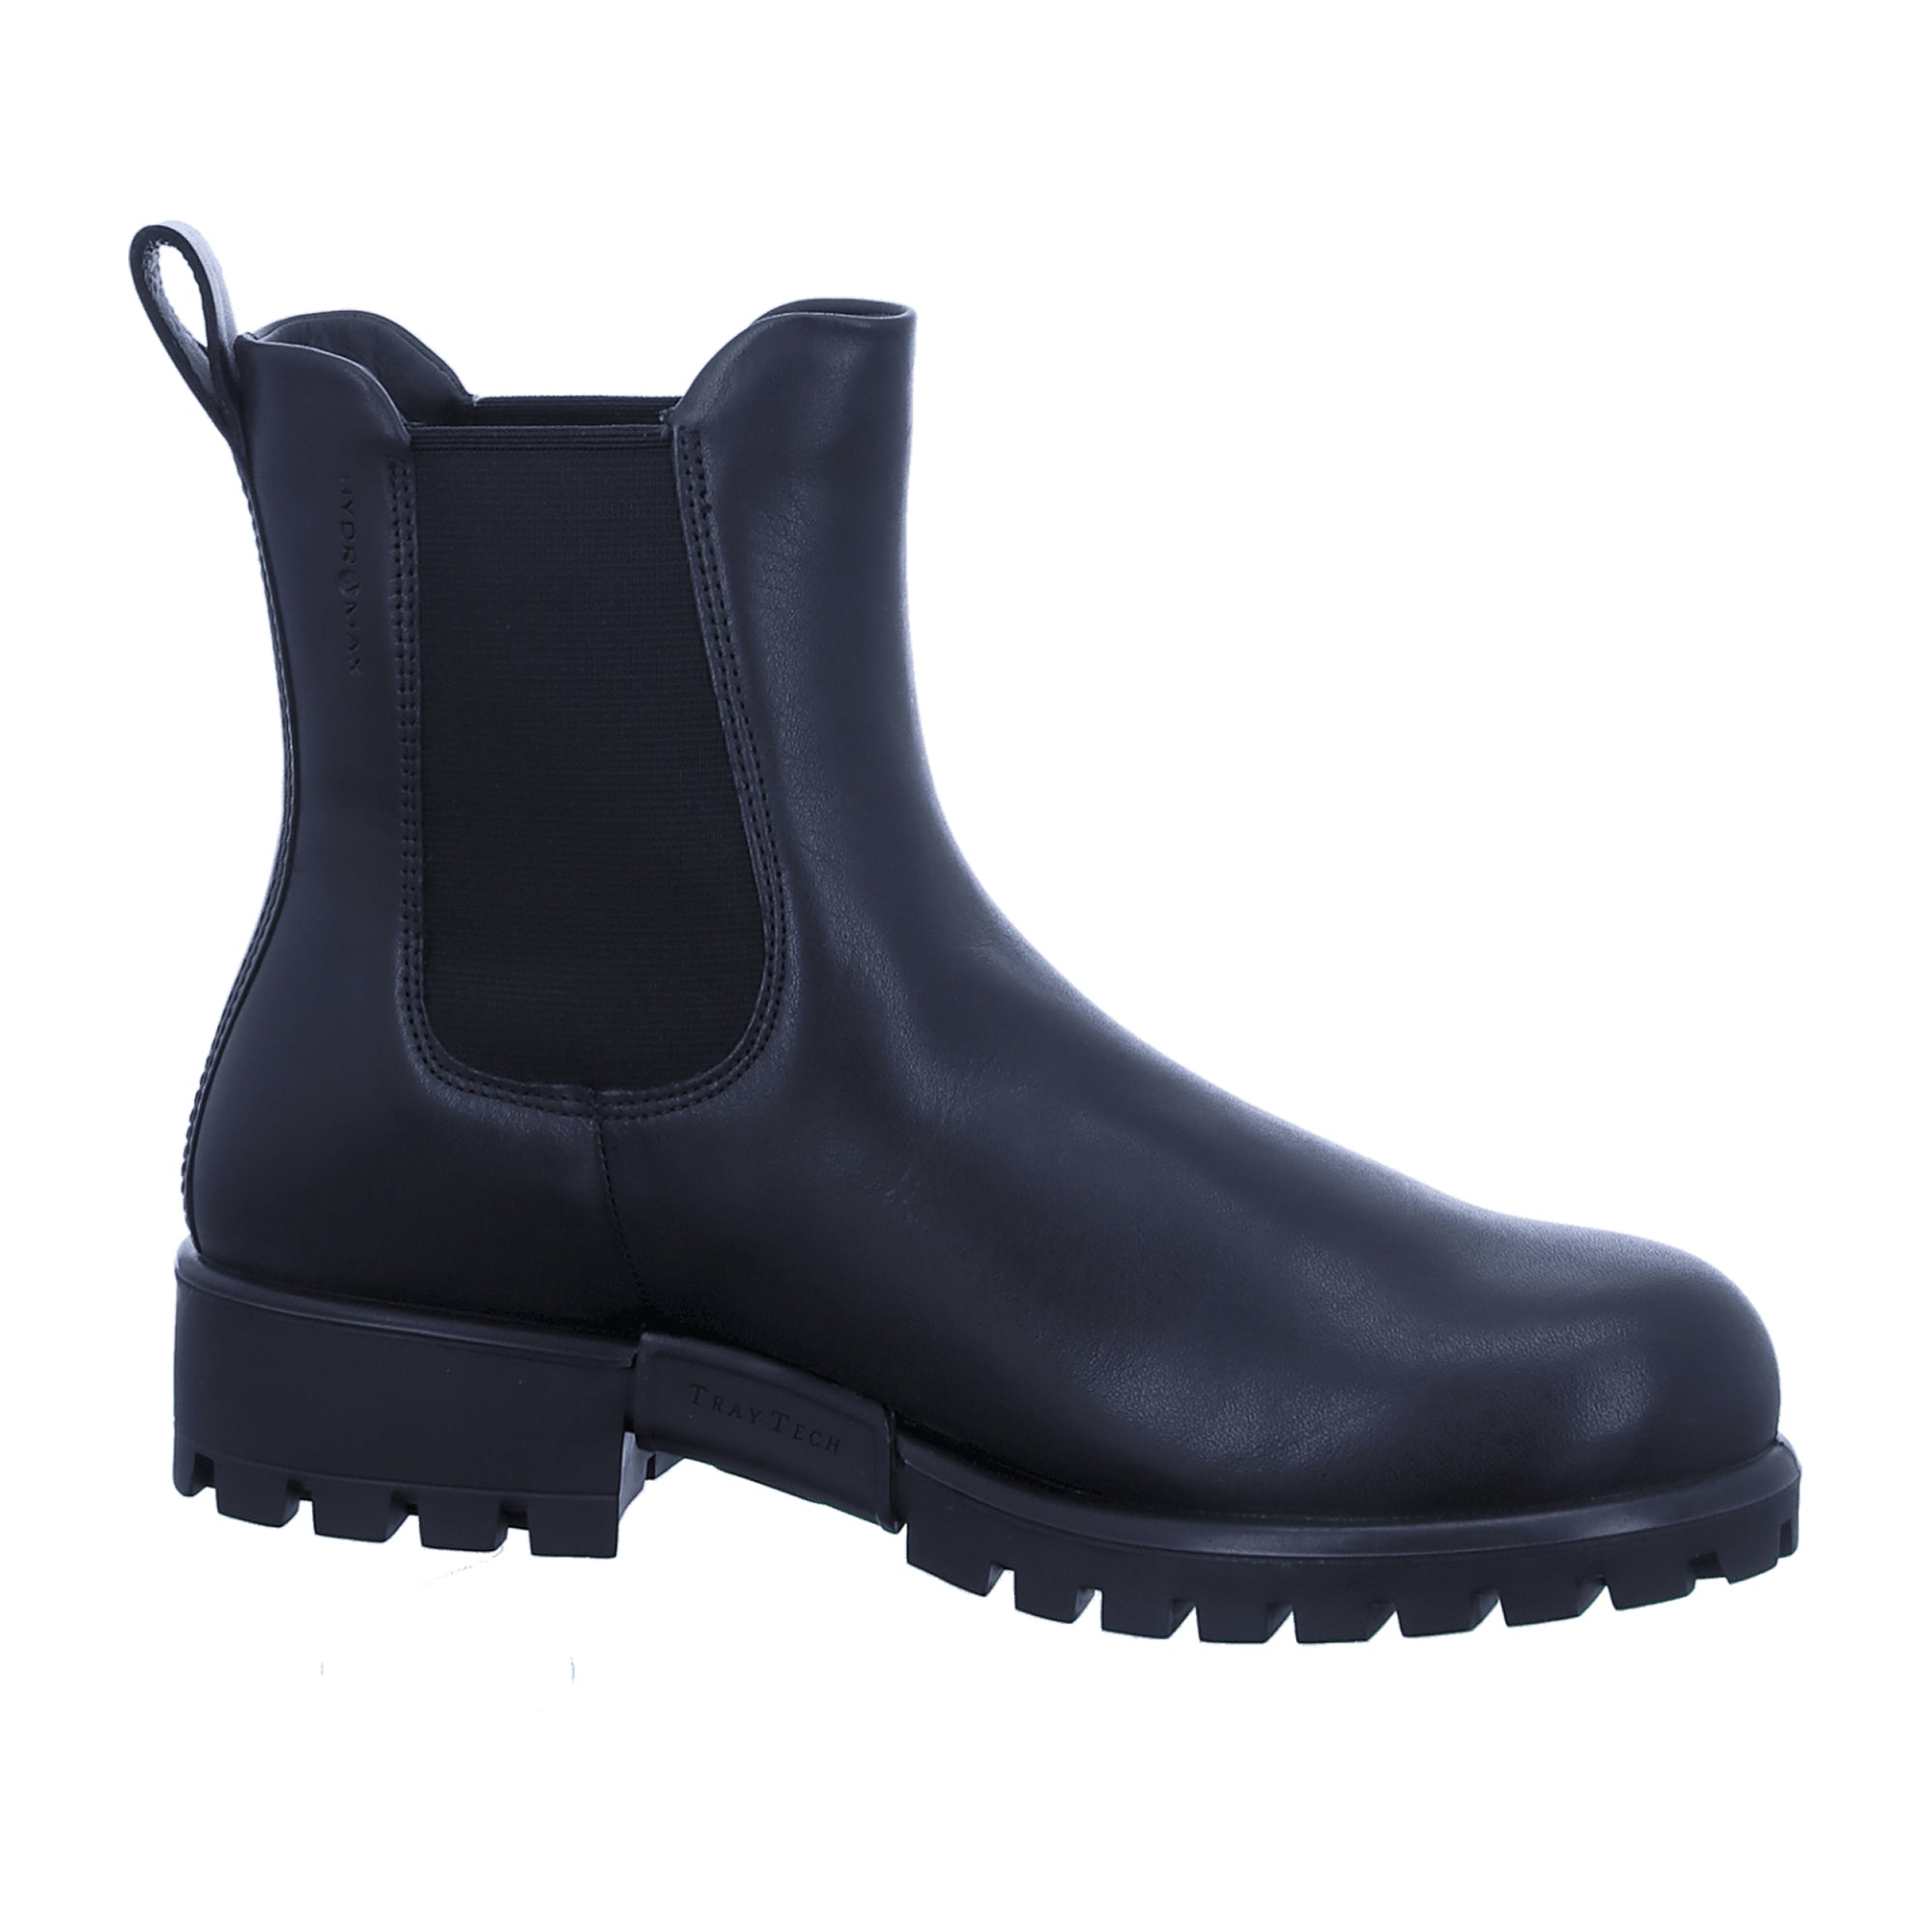 ECCO Modtray Women's Waterproof Black Leather Boots